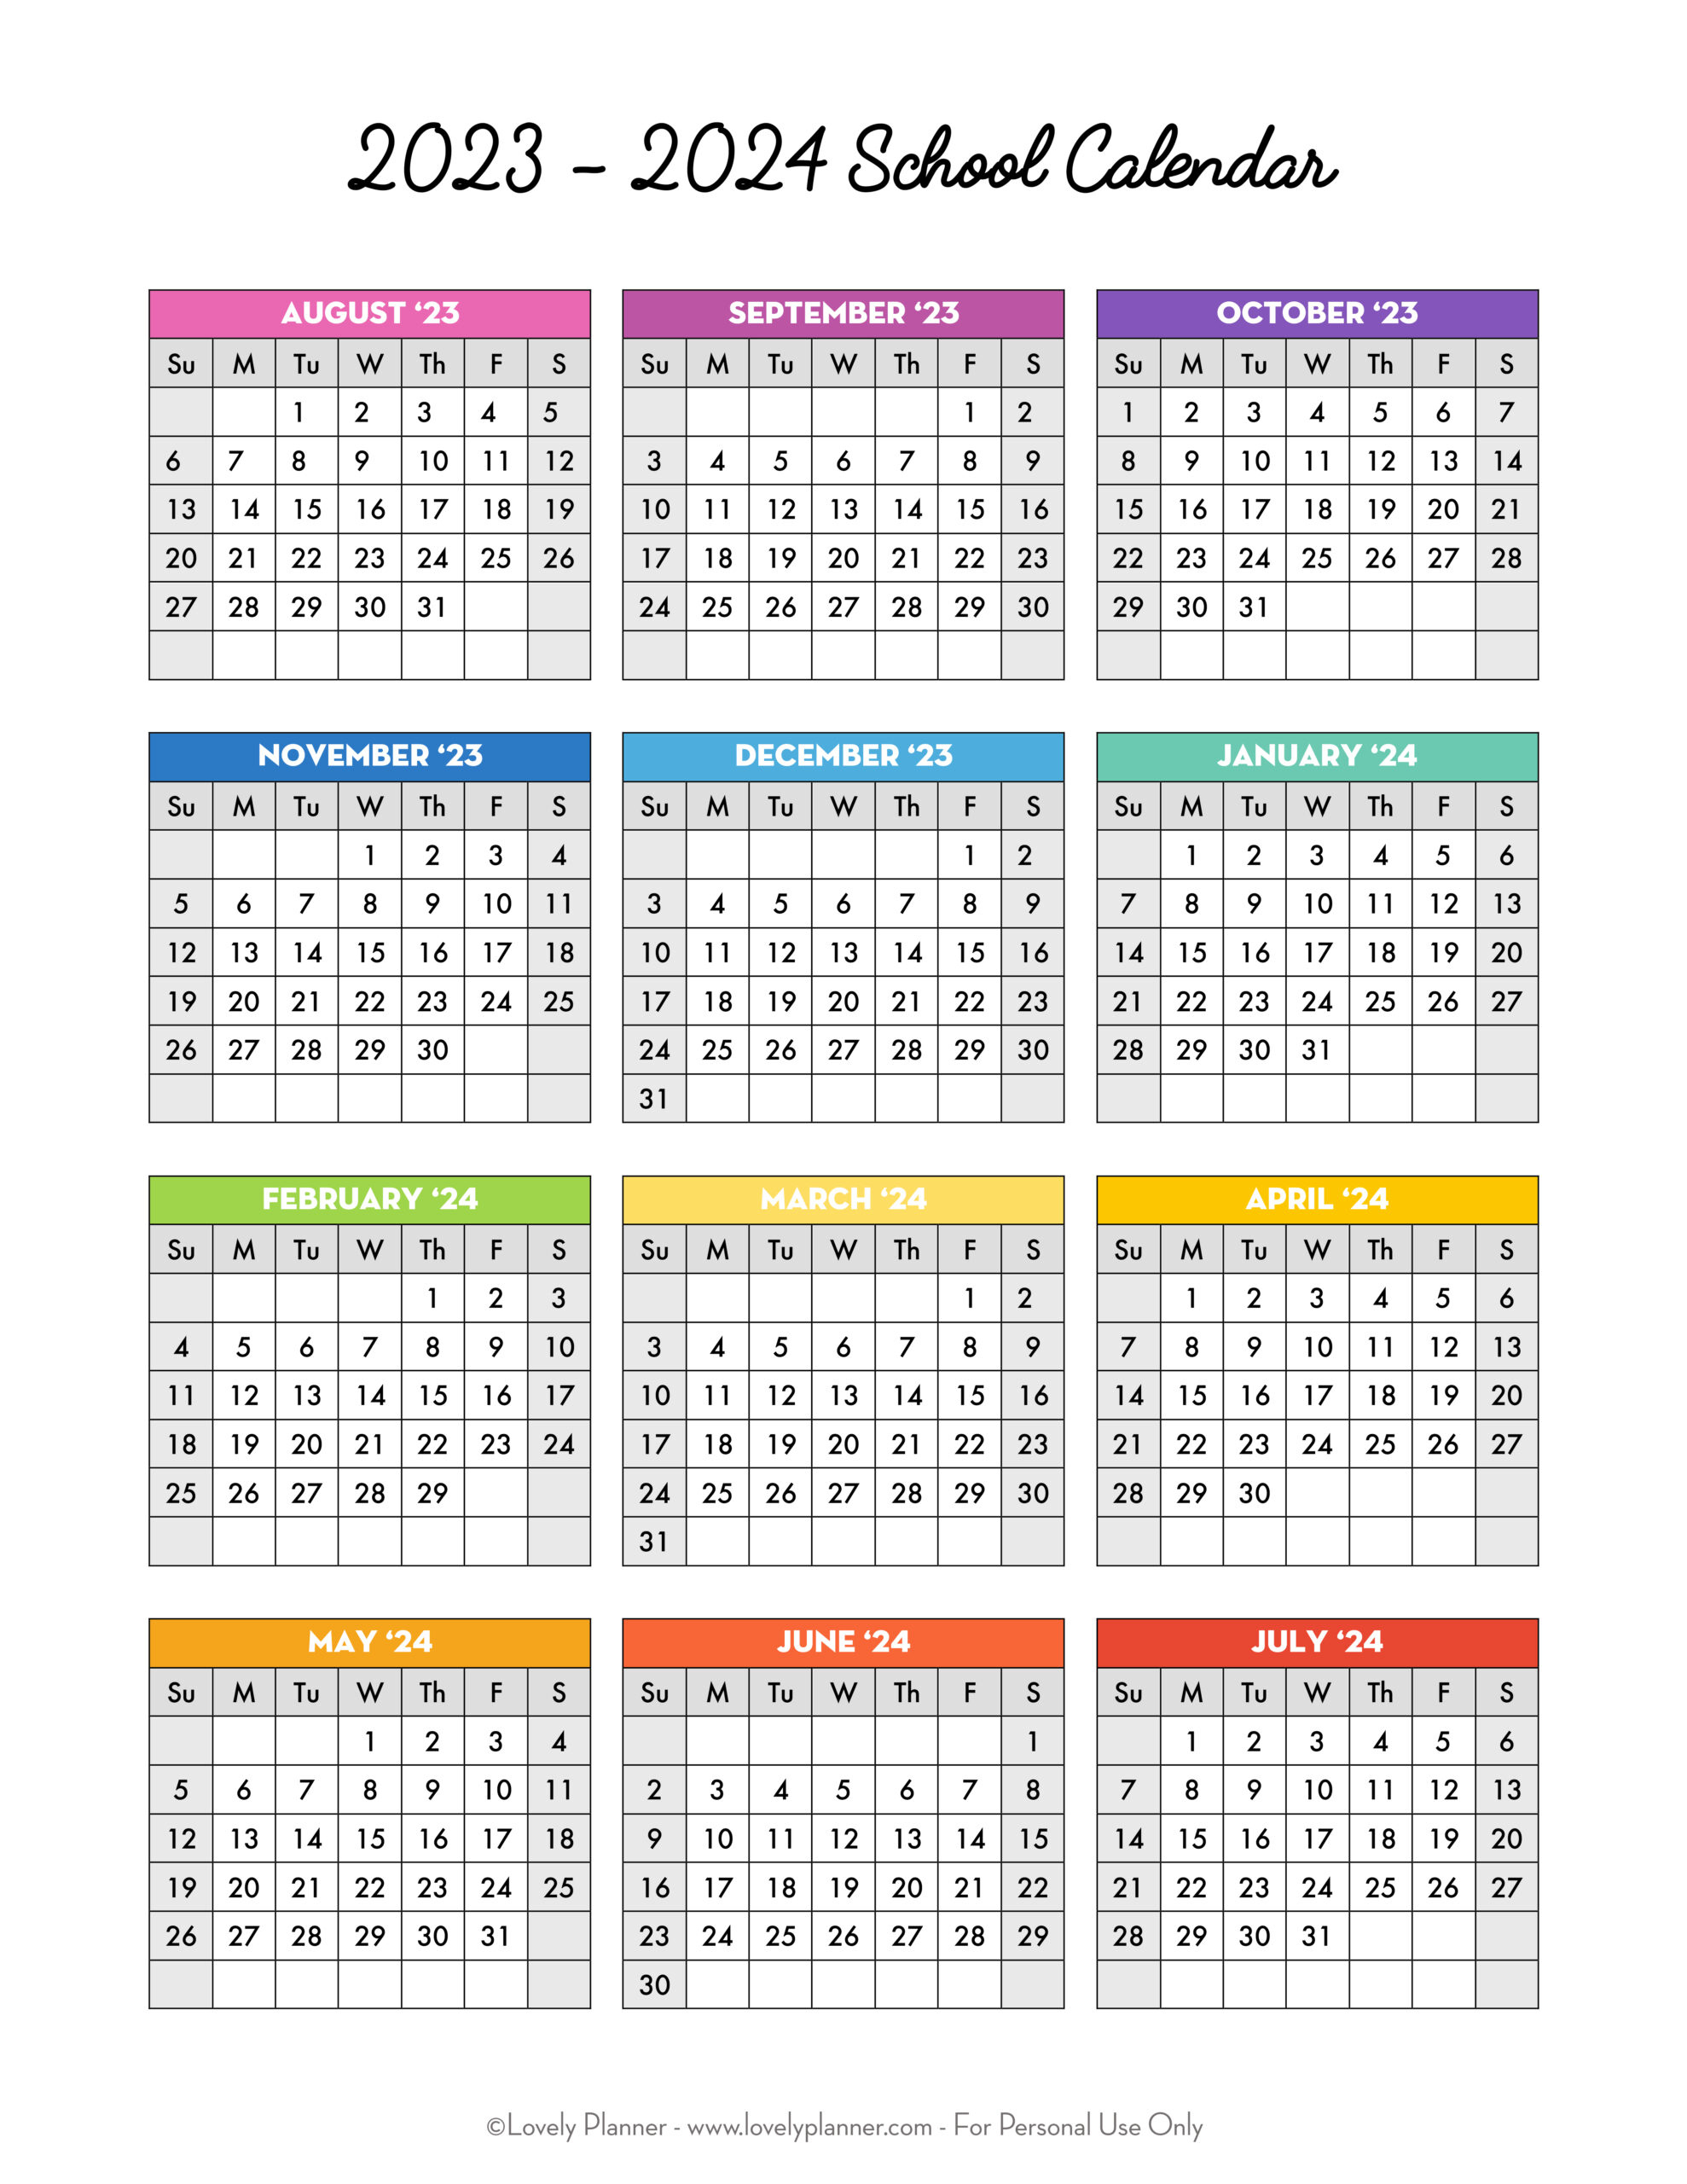 Free Printable 2023-2024 School Calendar - One Page Academic | Printable Calendar 2023 And 2024 Free